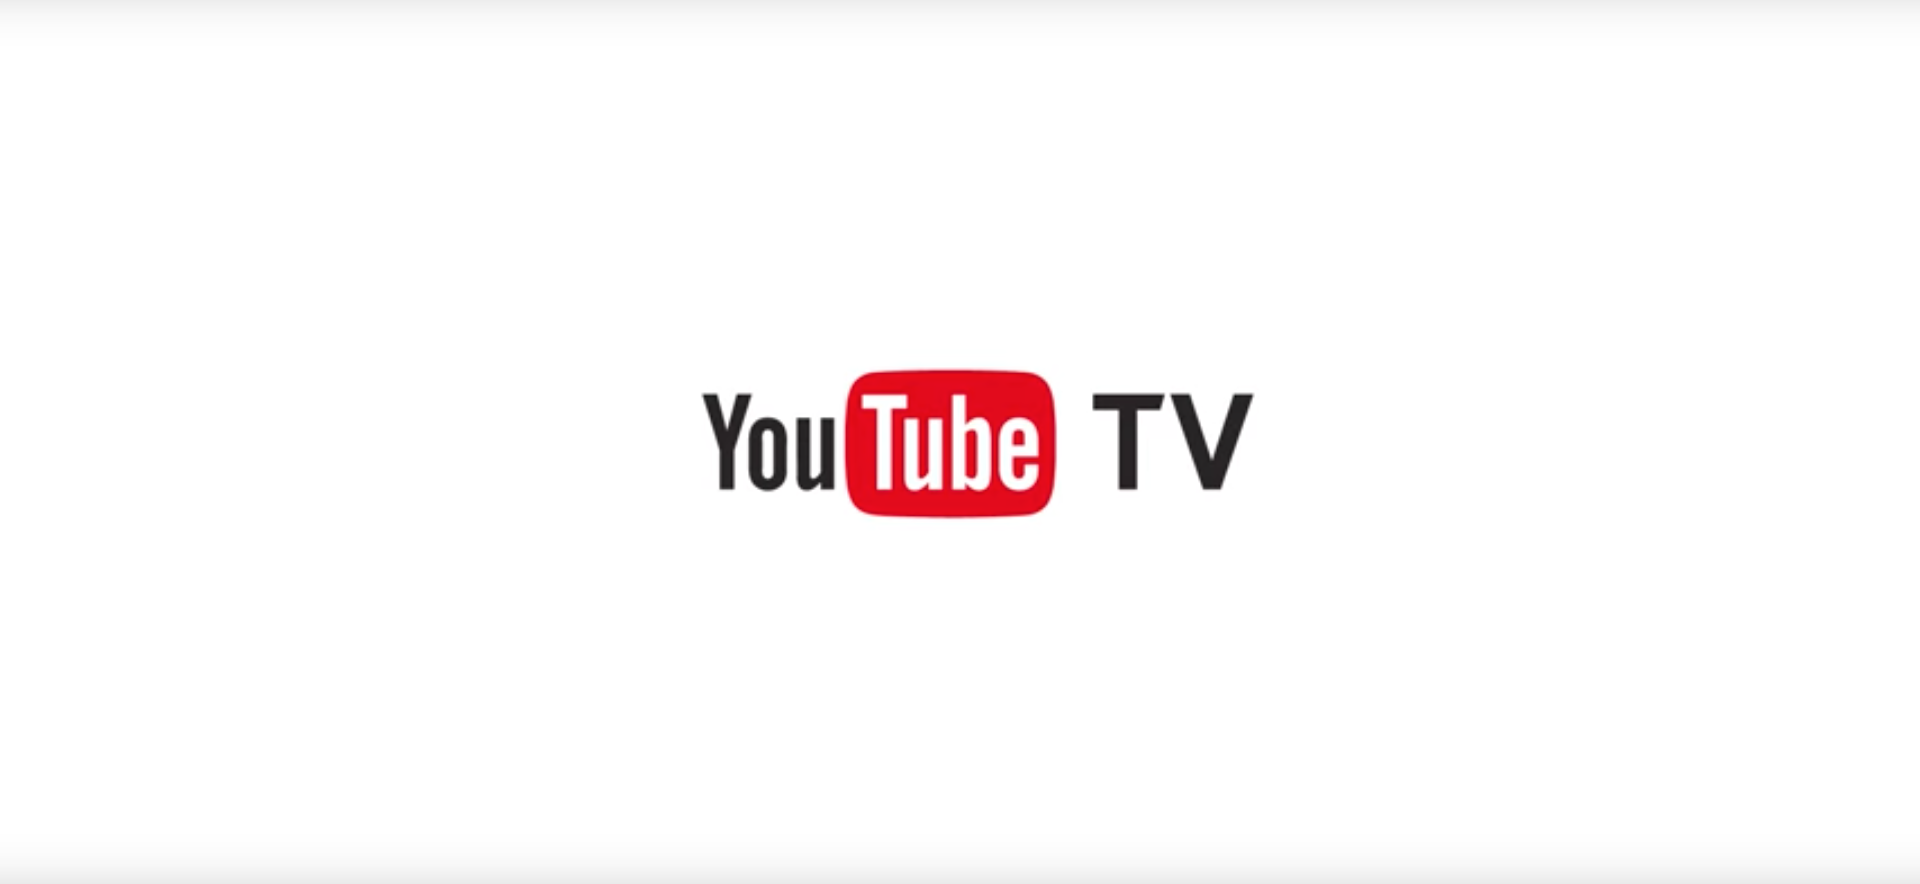 YouTube TV logo. Photo by: YouTube / Google